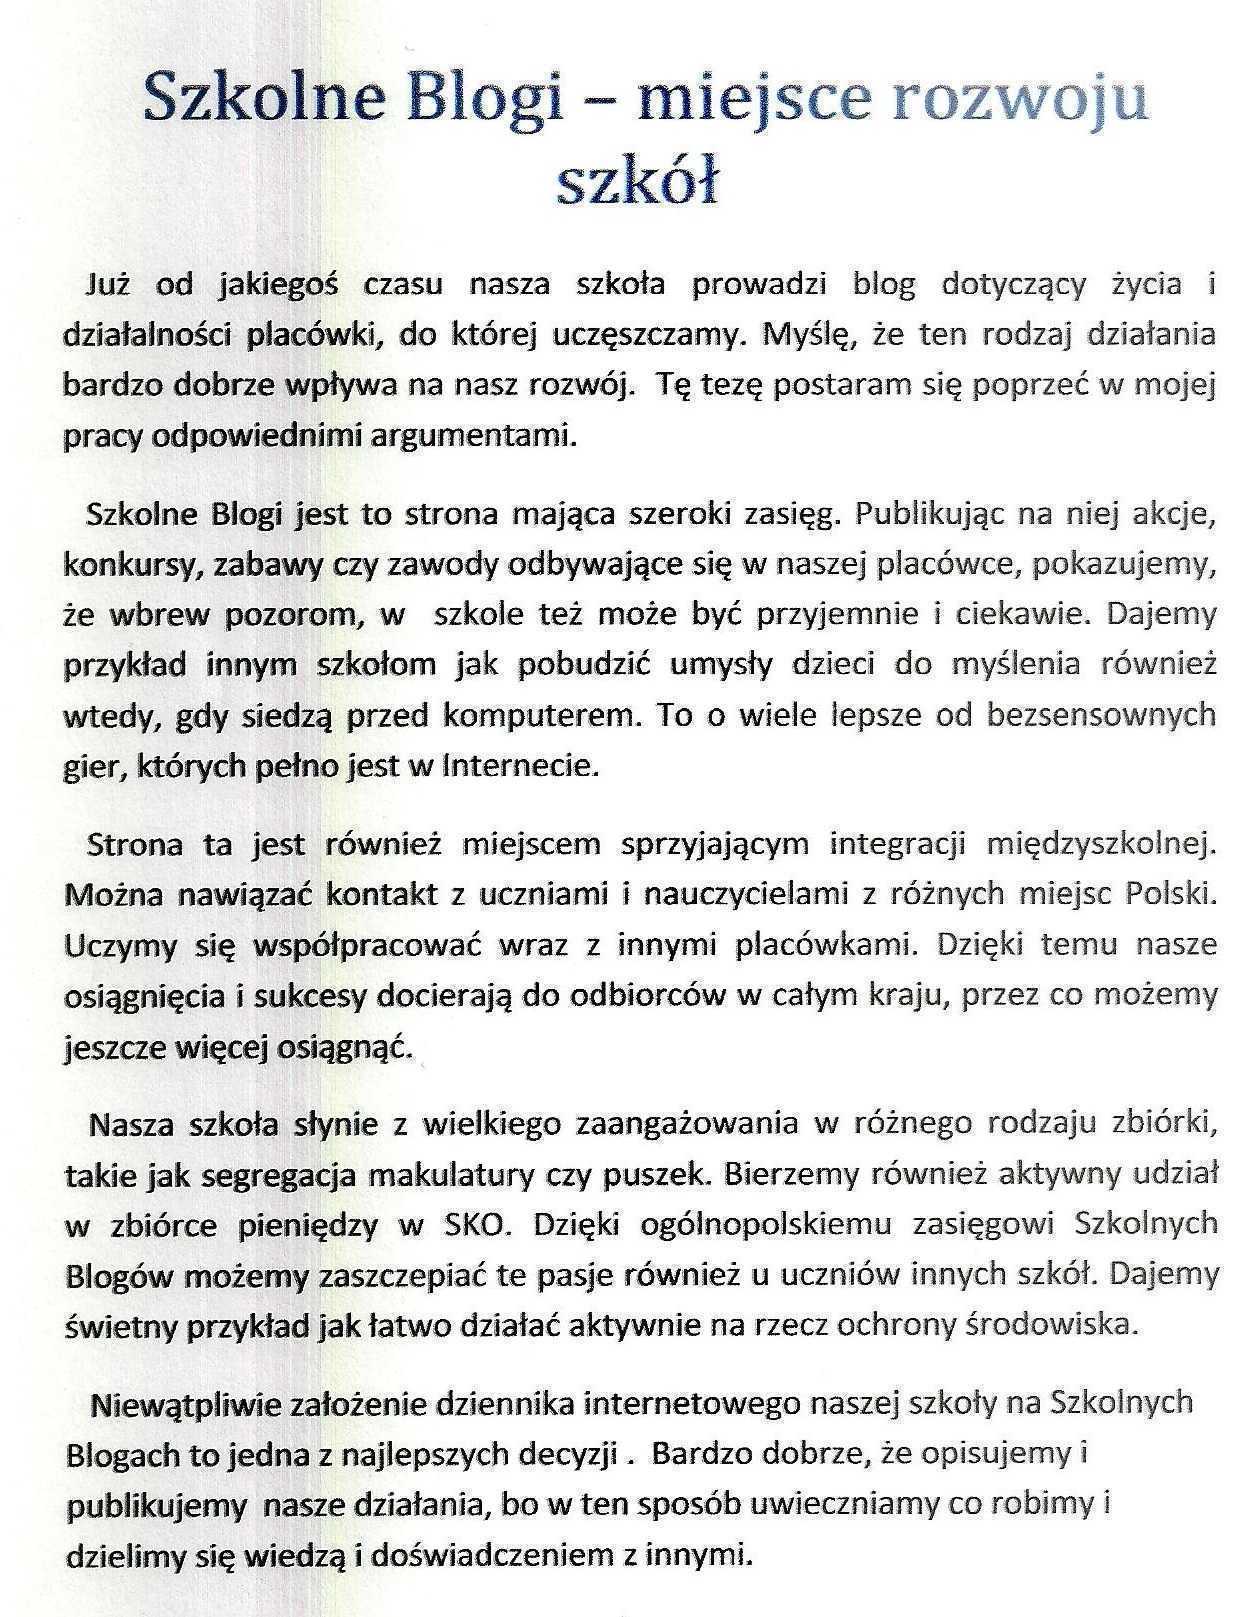 copy_of_SzkolneBlogi2001.jpg